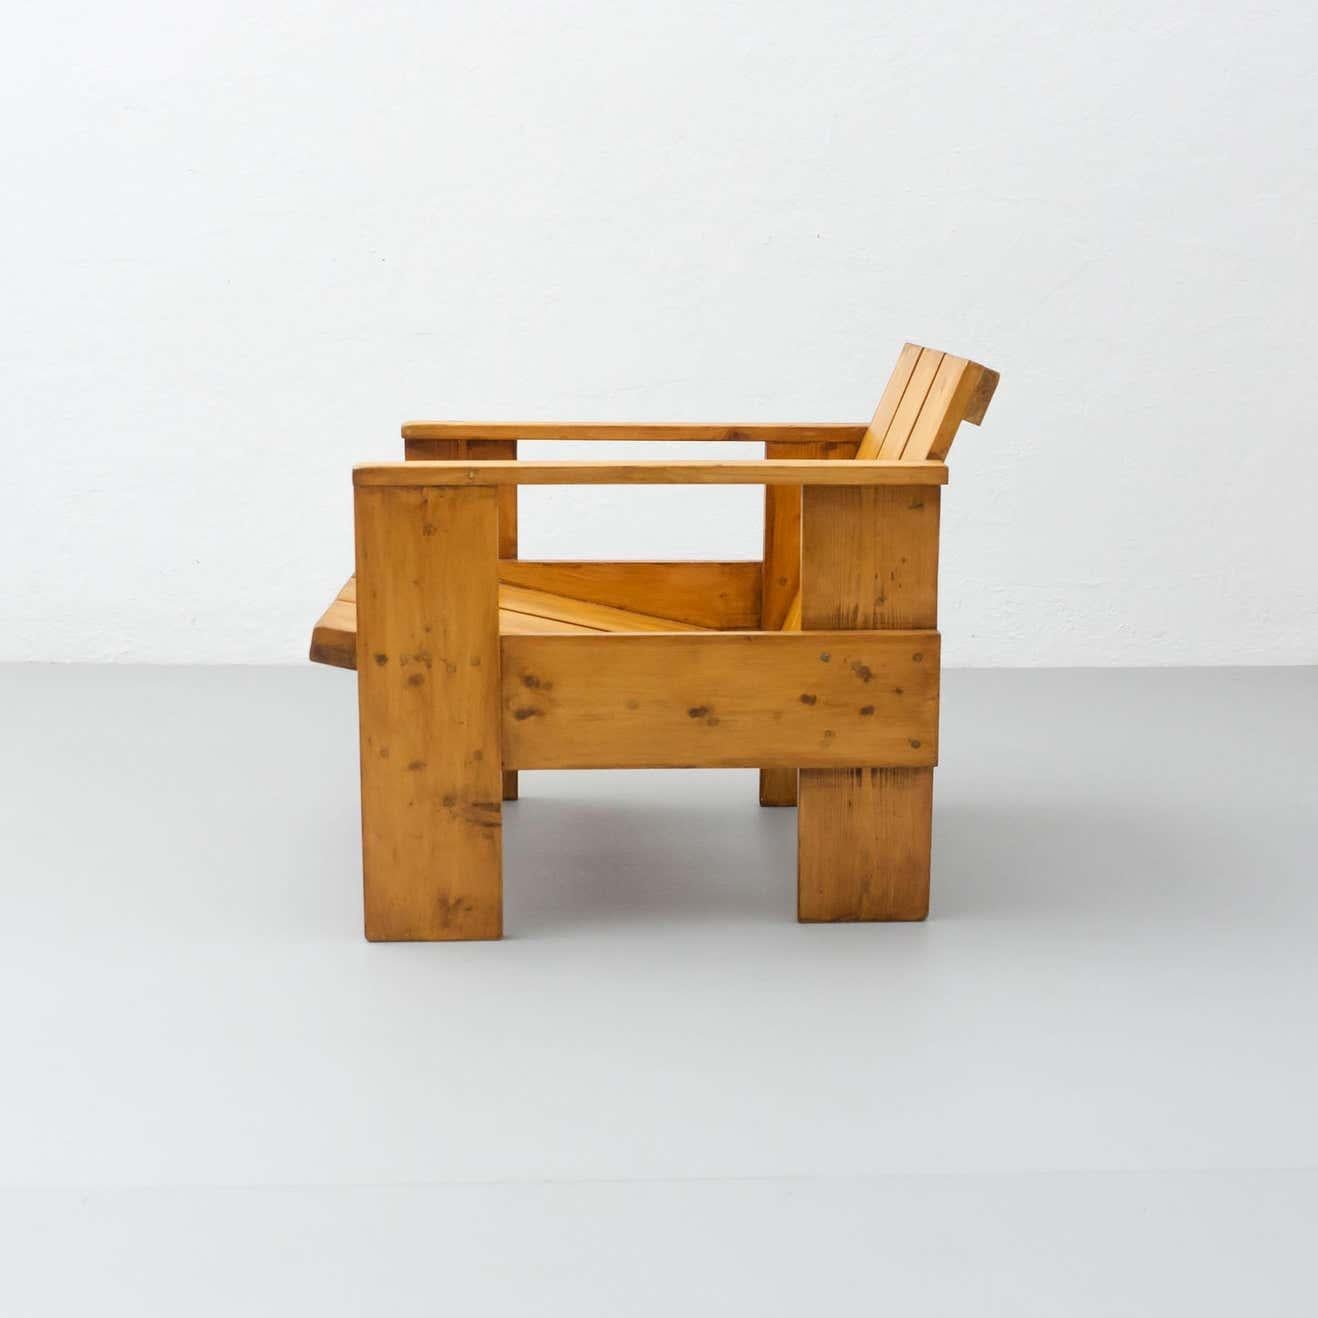 Dutch Gerrit Rietveld Mid-Century Modern Wood Crate Chair, circa 1950